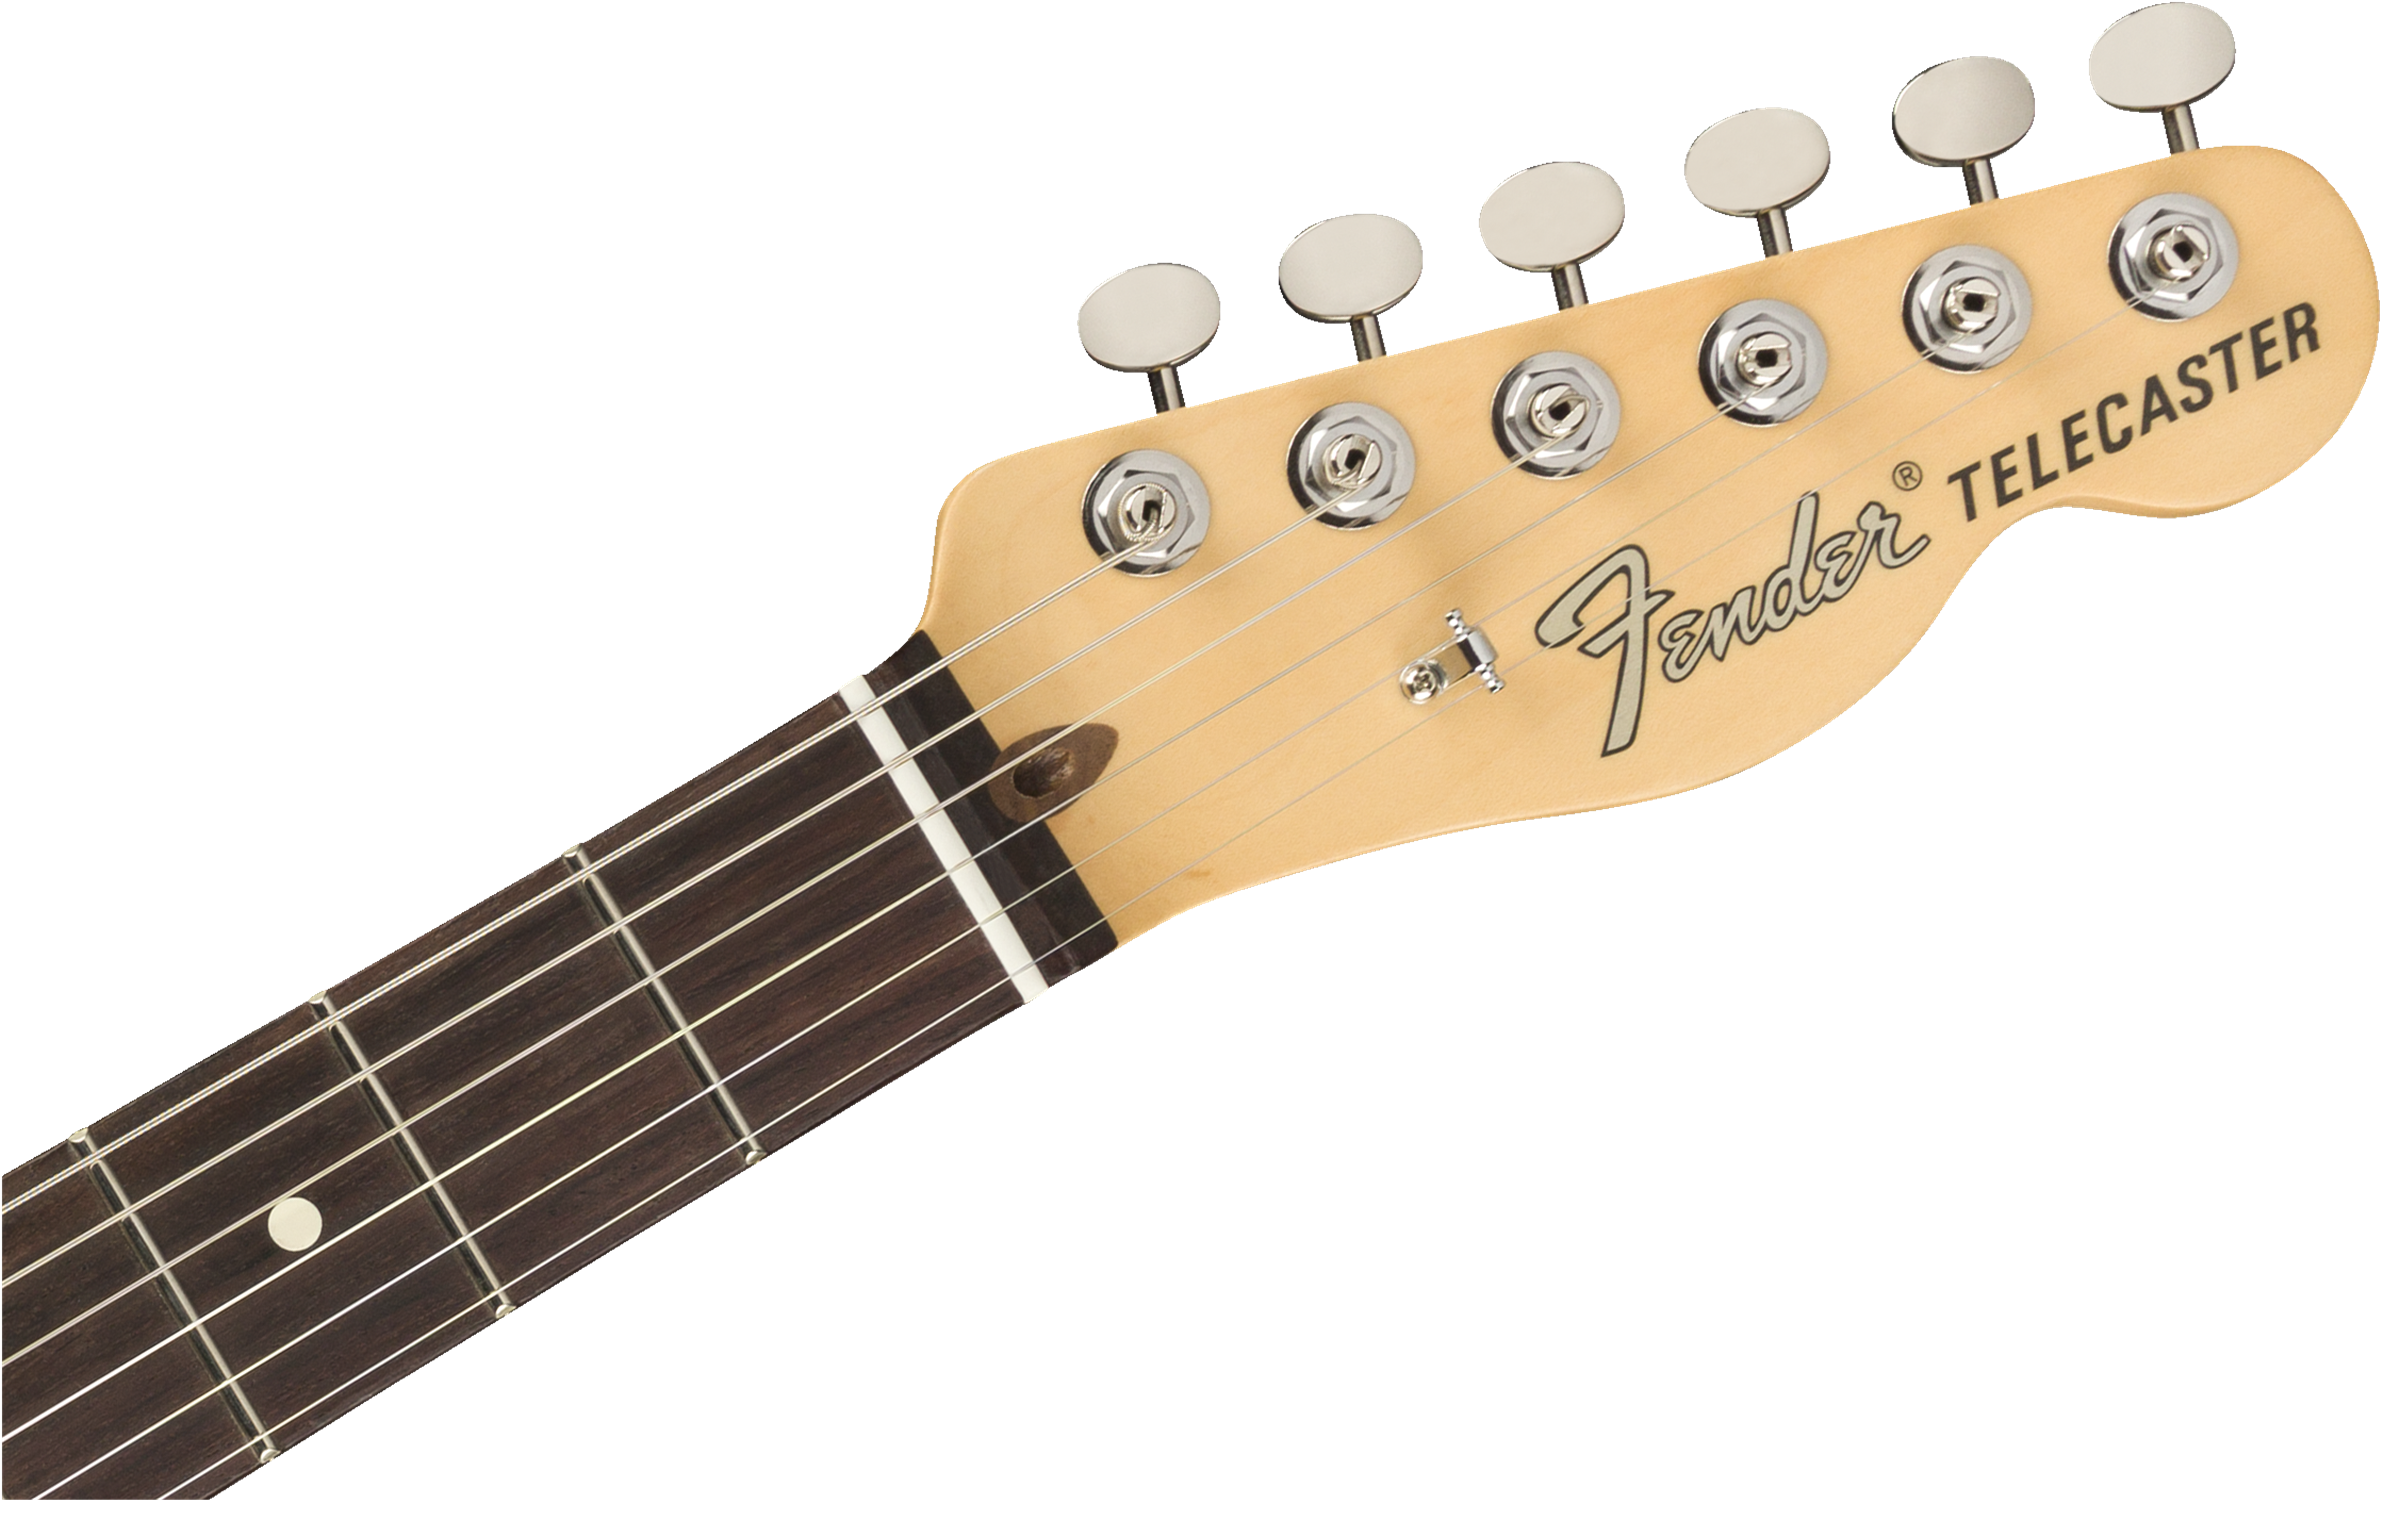 Fender American Performer Telecaster with Humbucking Pickup Rosewood Fingerboard - Aubergine 0115120345